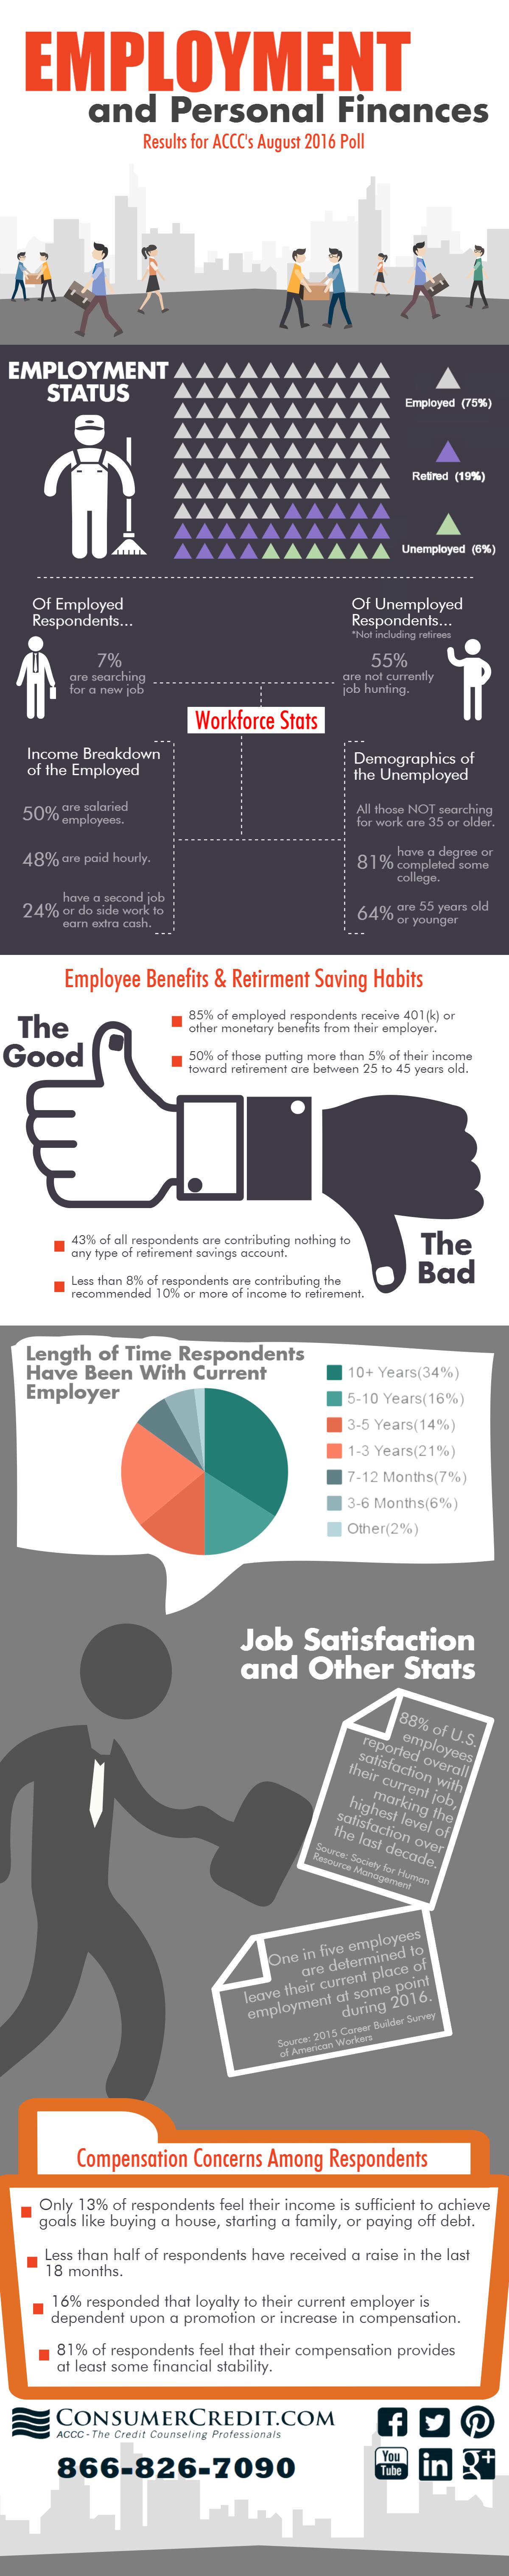 employment infographic